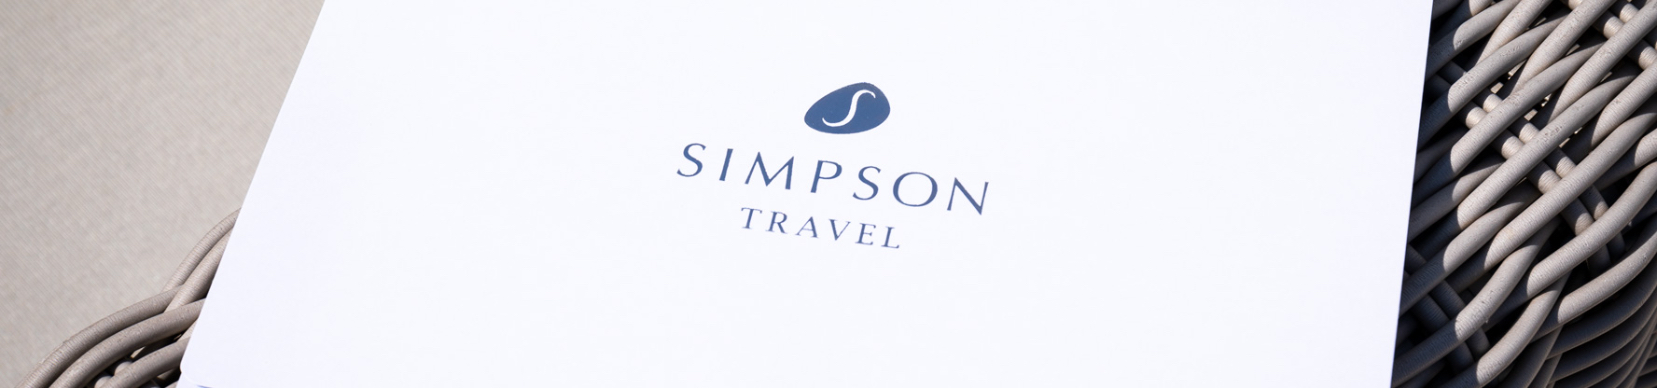 simpson group travel insurance calgary